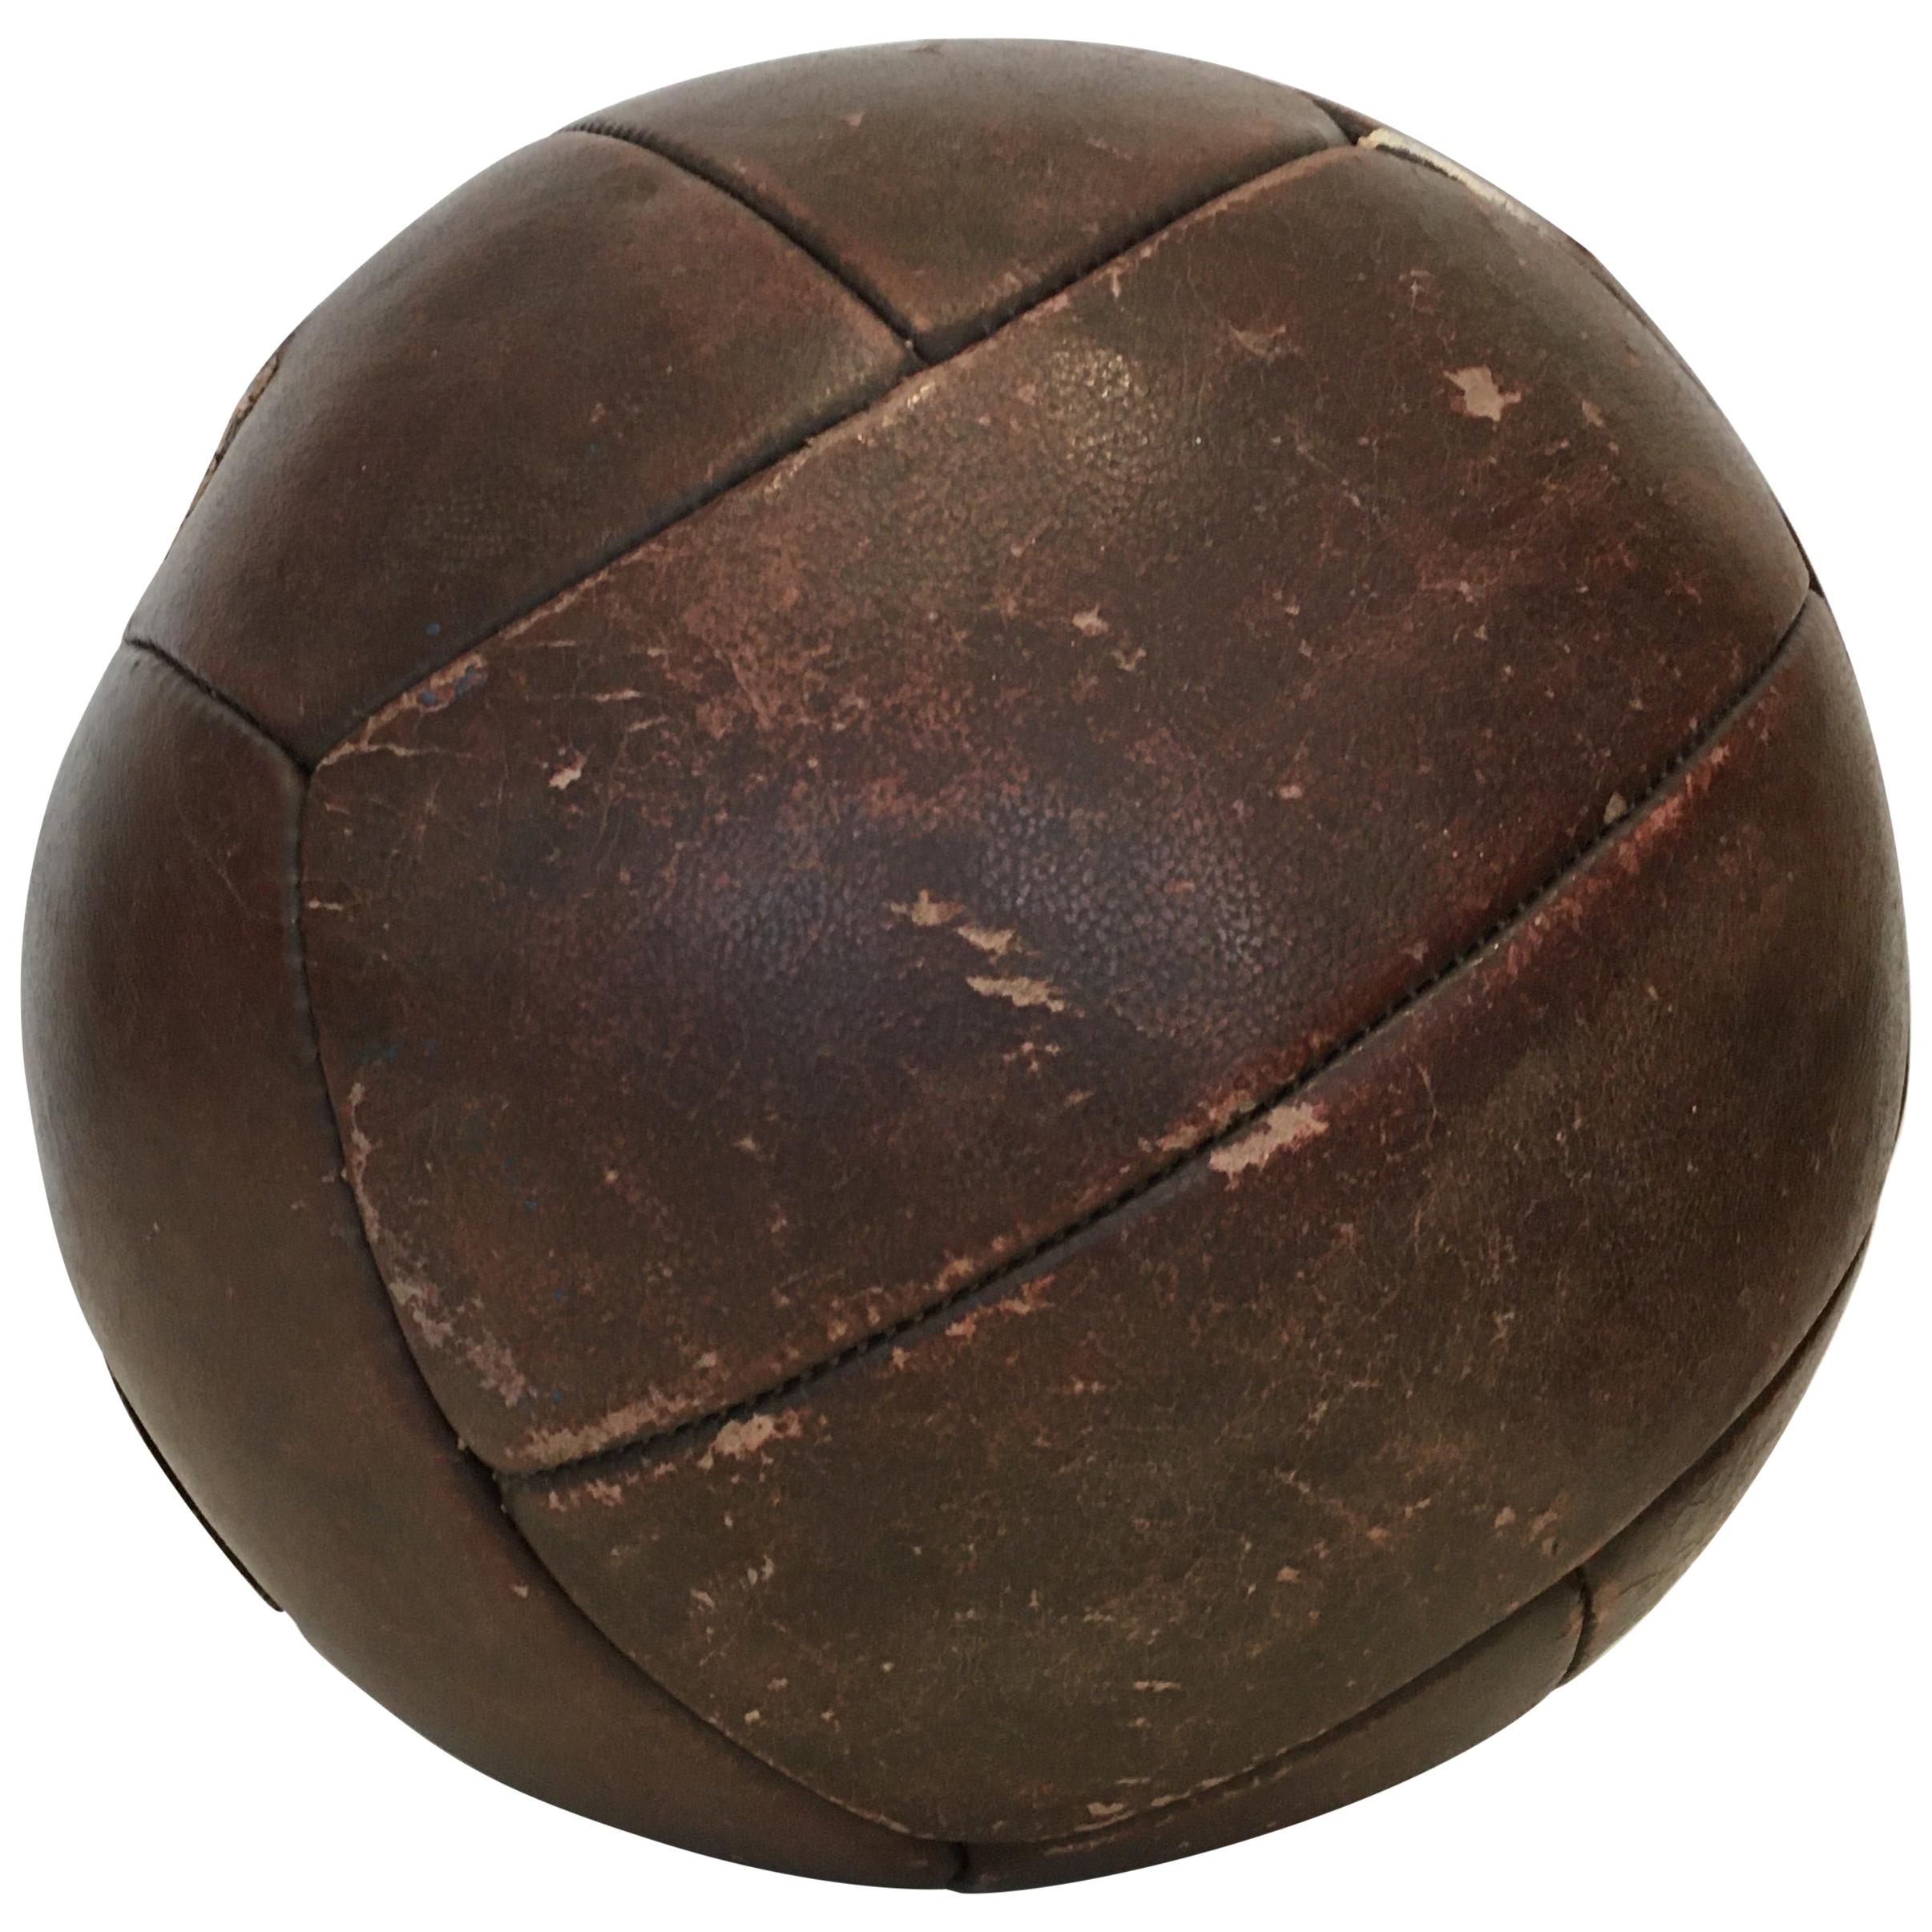 Vintage Mahogany Leather Medicine Ball, 4kg, 1930s